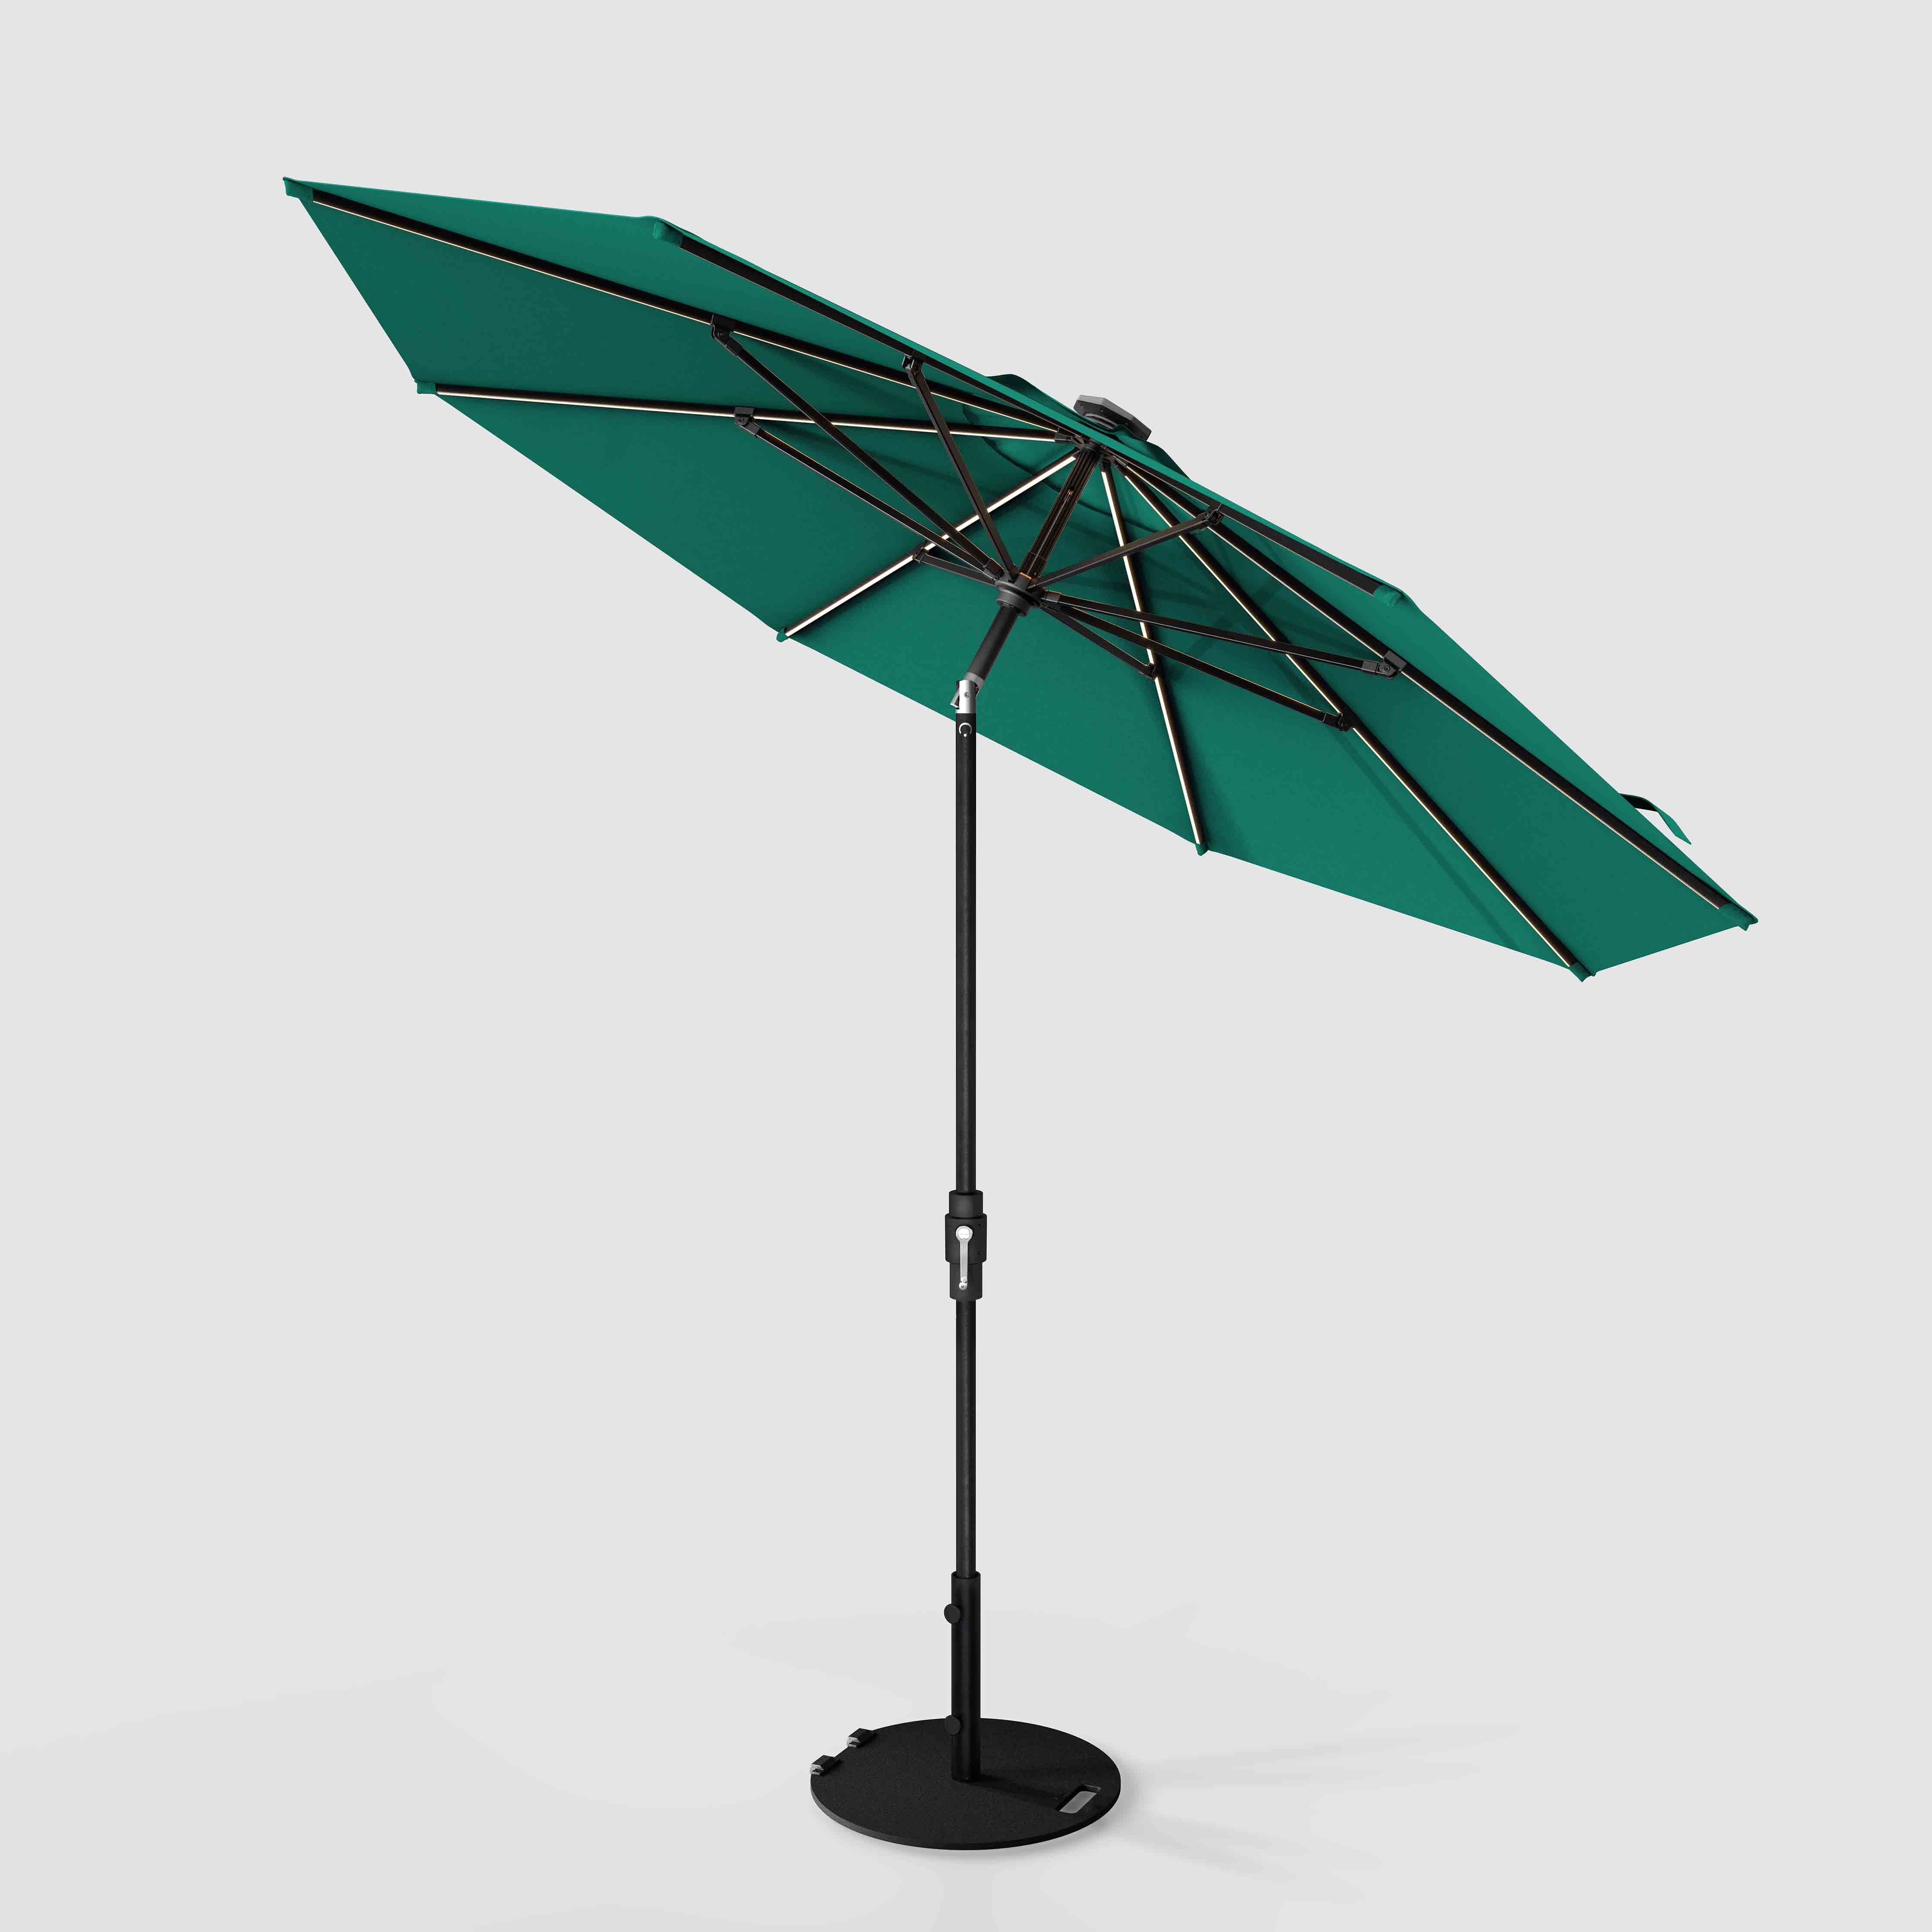 The LED Swilt™ - Sunbrella Canvas Teal